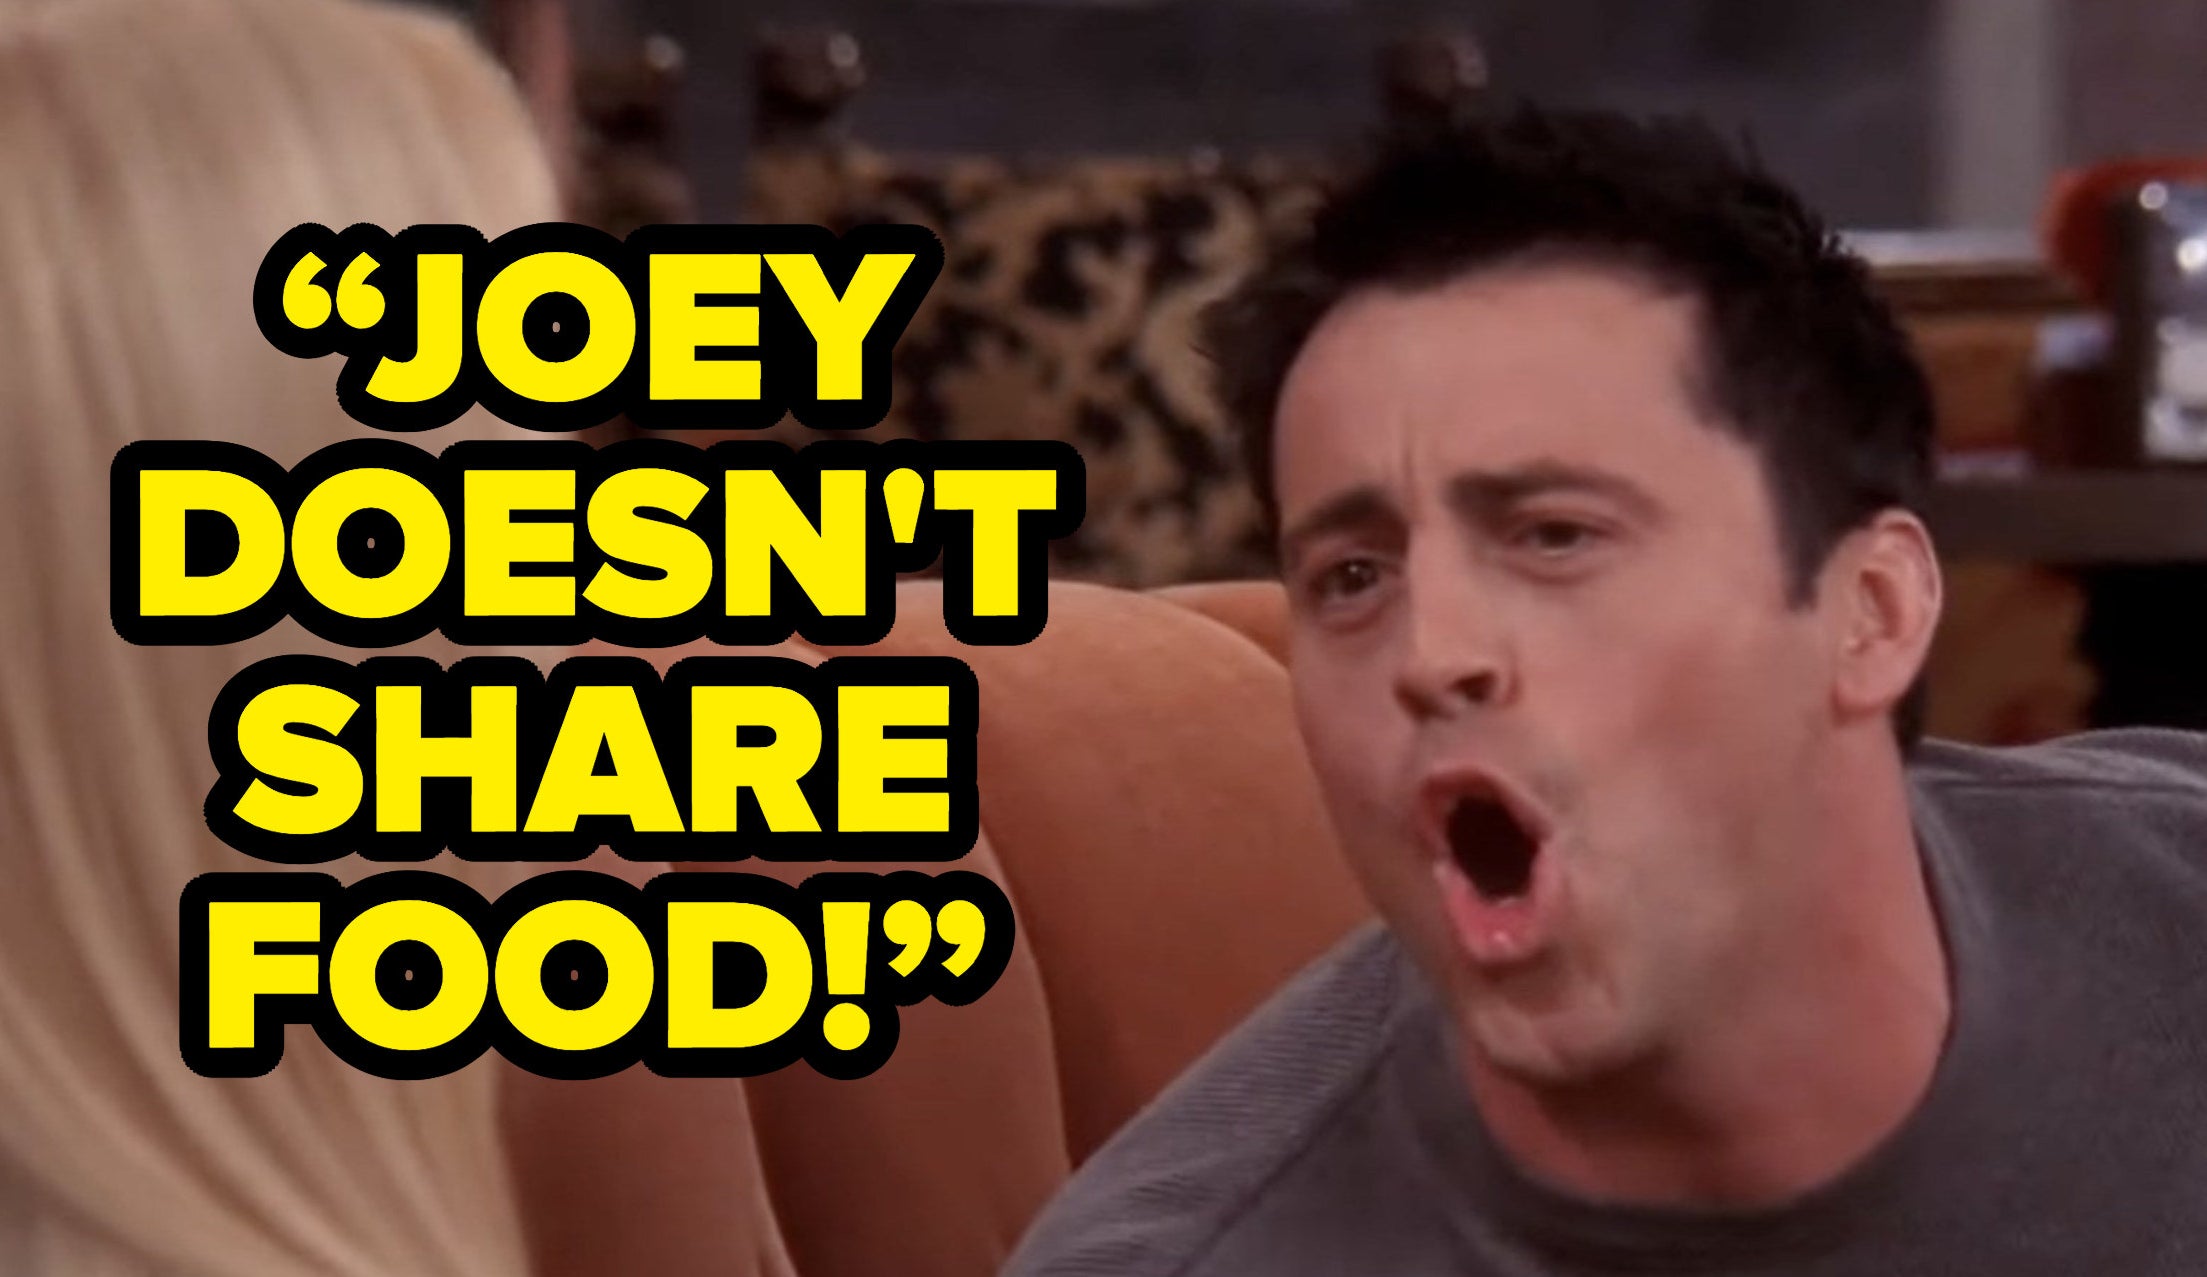 joey yelling “JOEY DOESN&#x27;T SHARE FOOD!” on friends